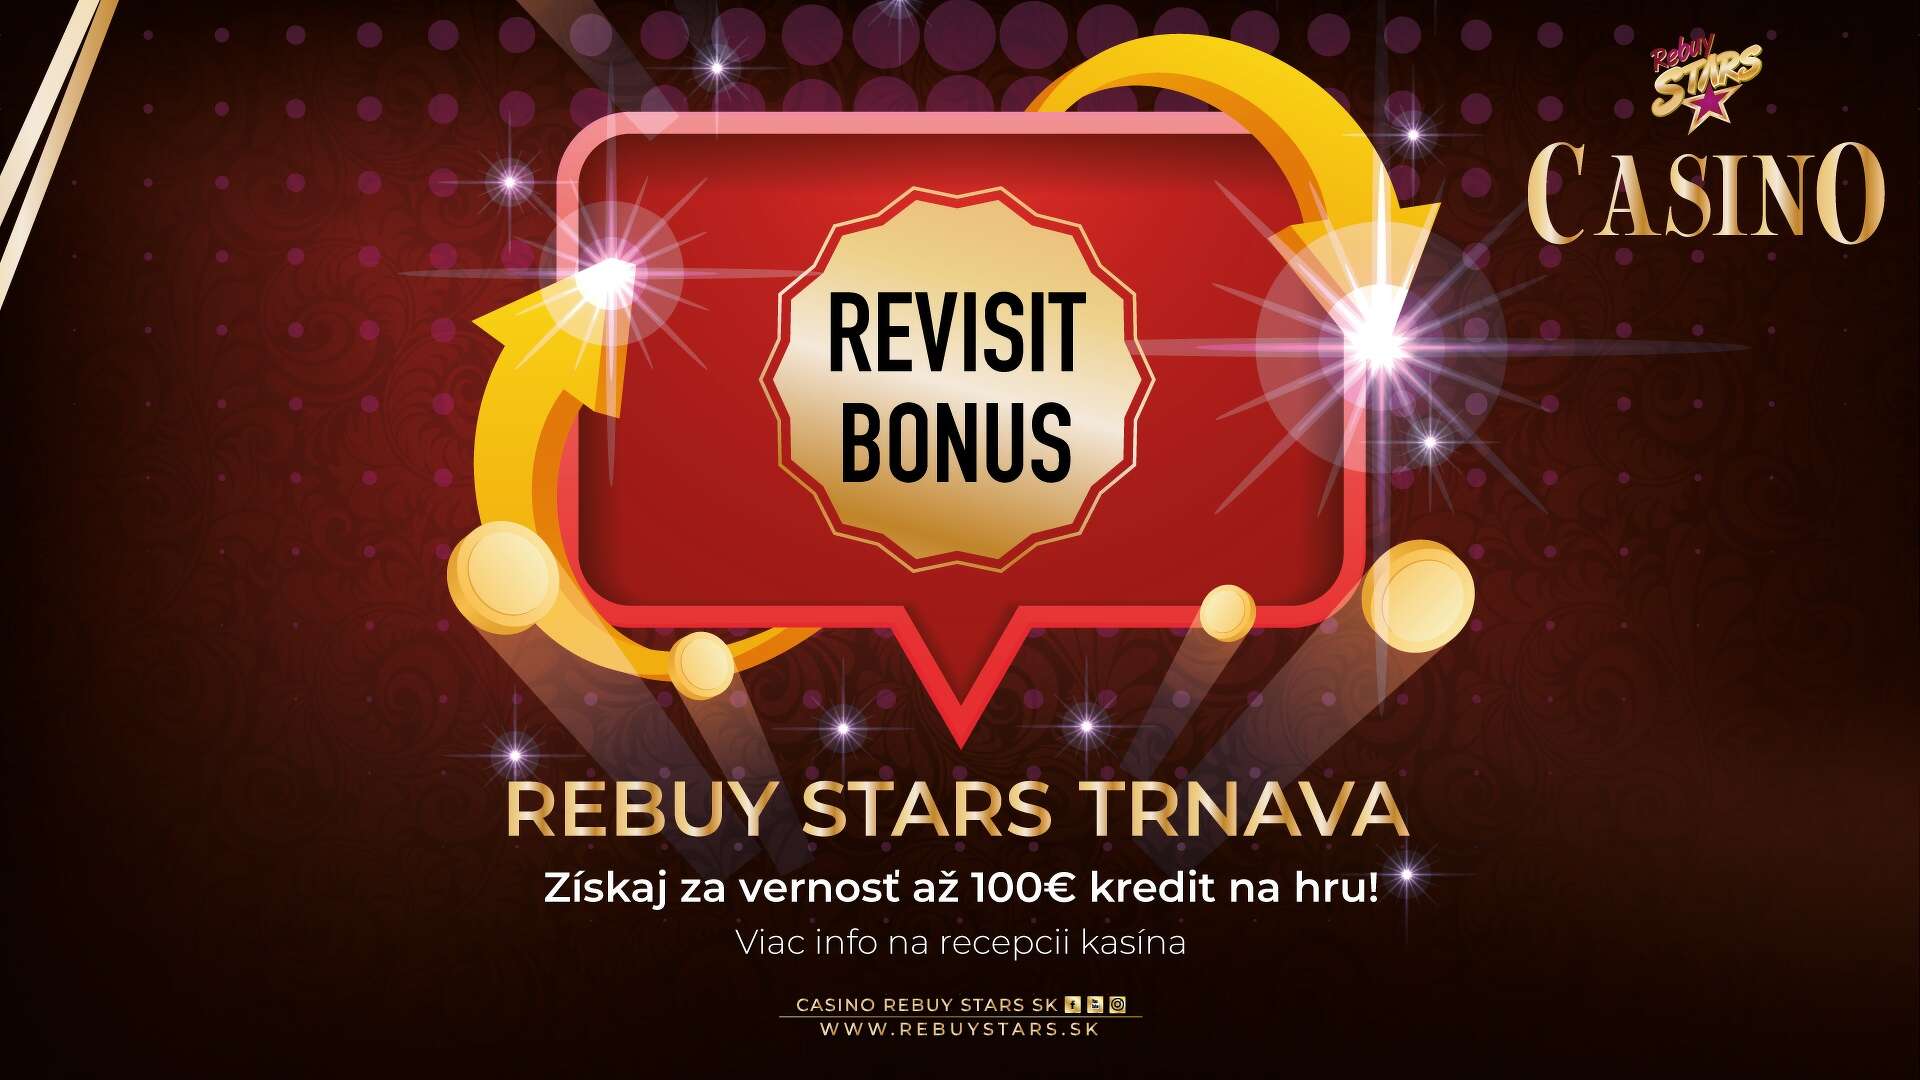 REVISIT BONUS – Casino Rebuy Stars Trnava